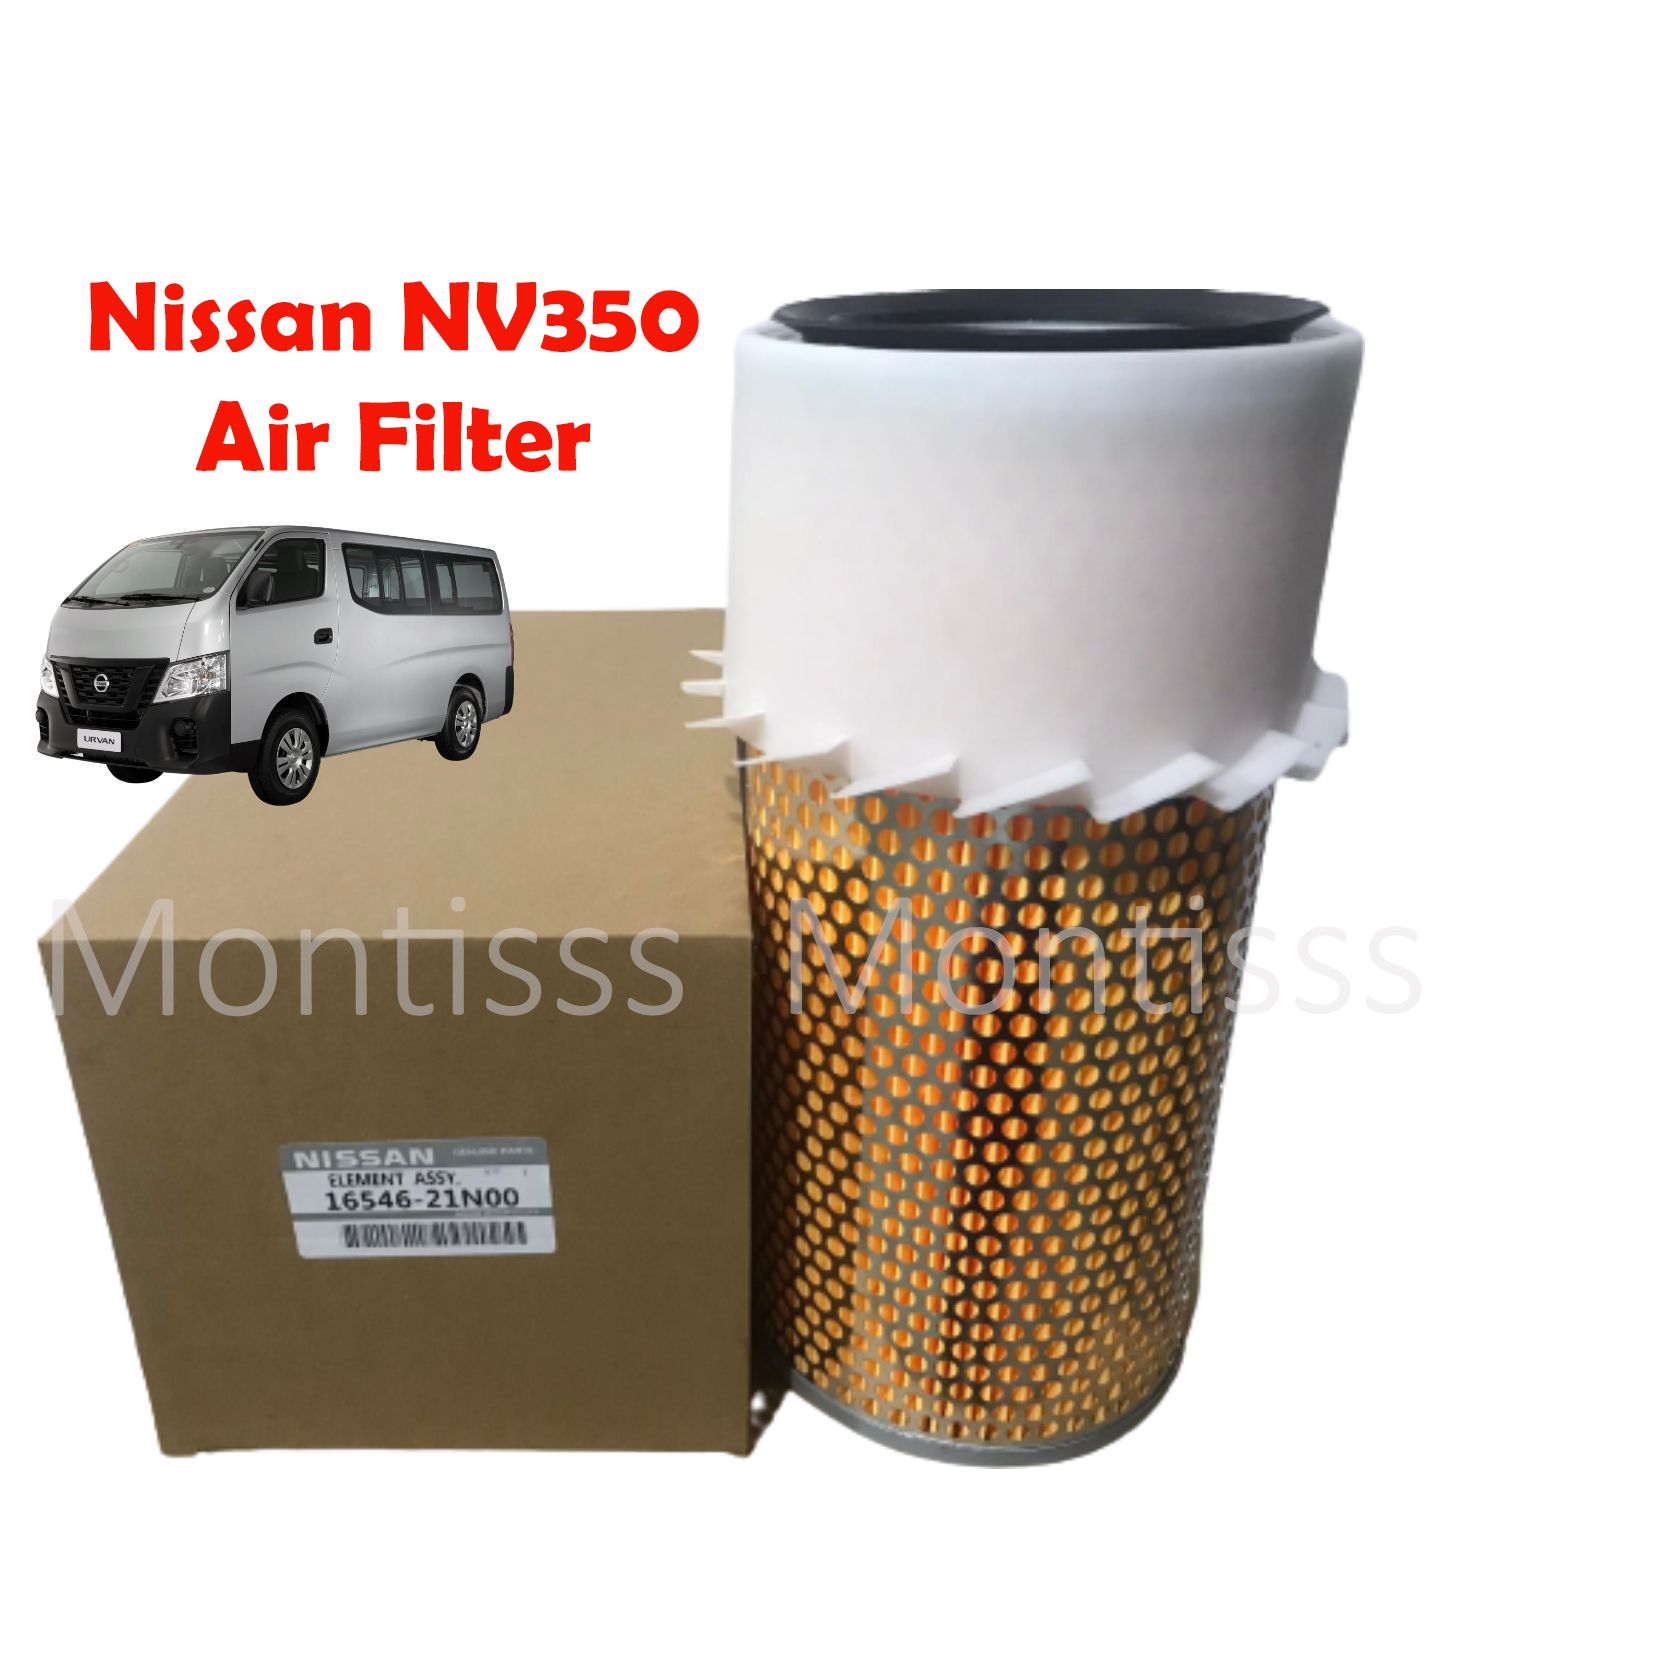 Air Filter for Nissan Urvan NV350 (16546-21N00) Lazada PH